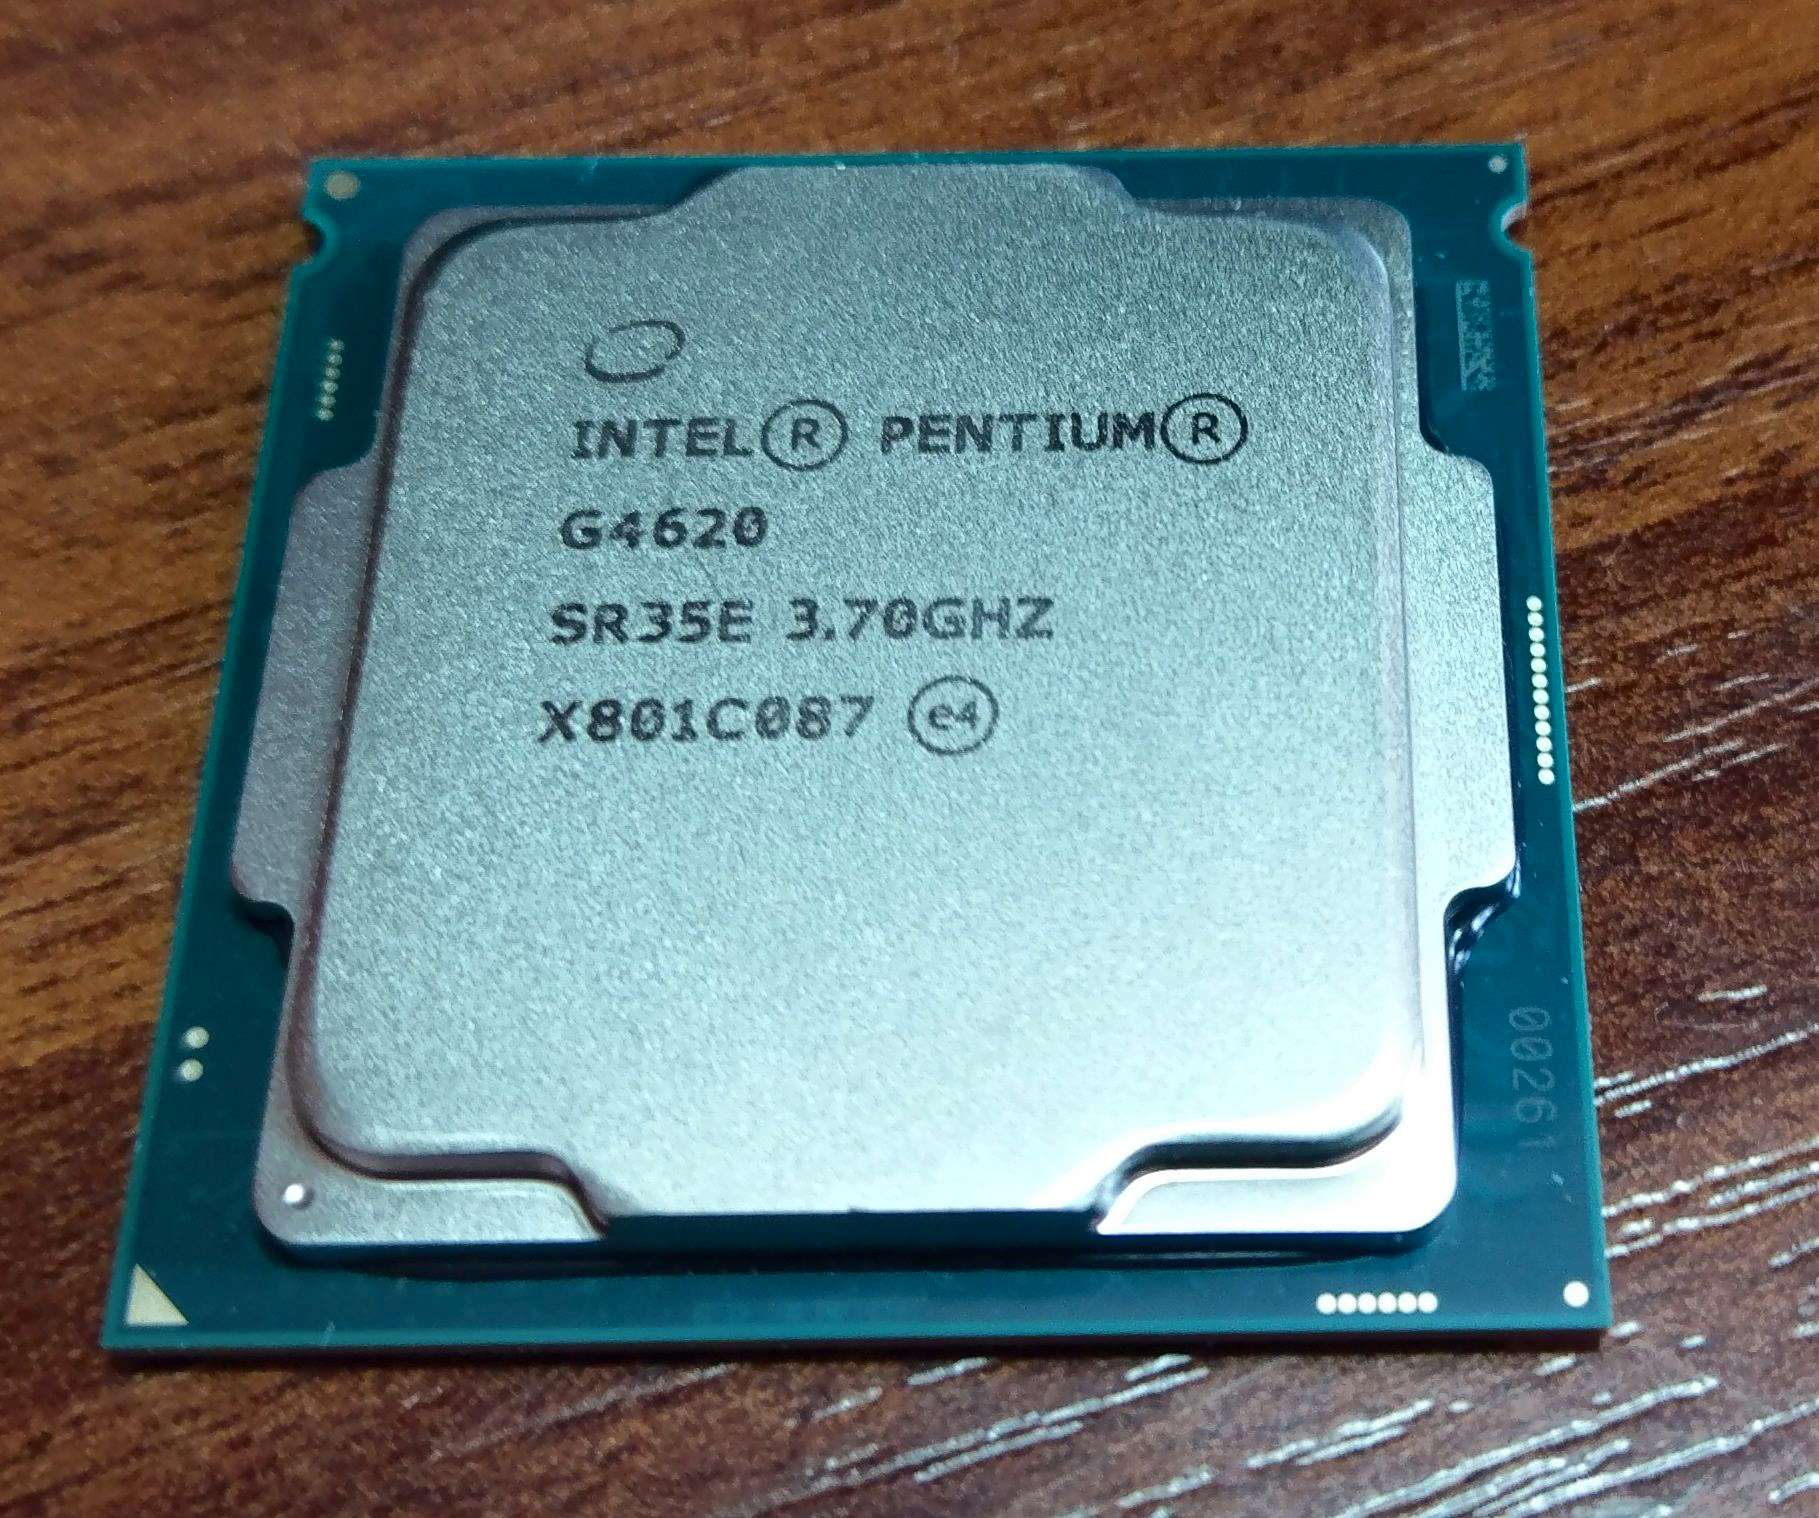 Intel g4620. Пентиум g4620. Интел кор g4620. Pentium g4620(3.7g. Intel Pentium 4620.